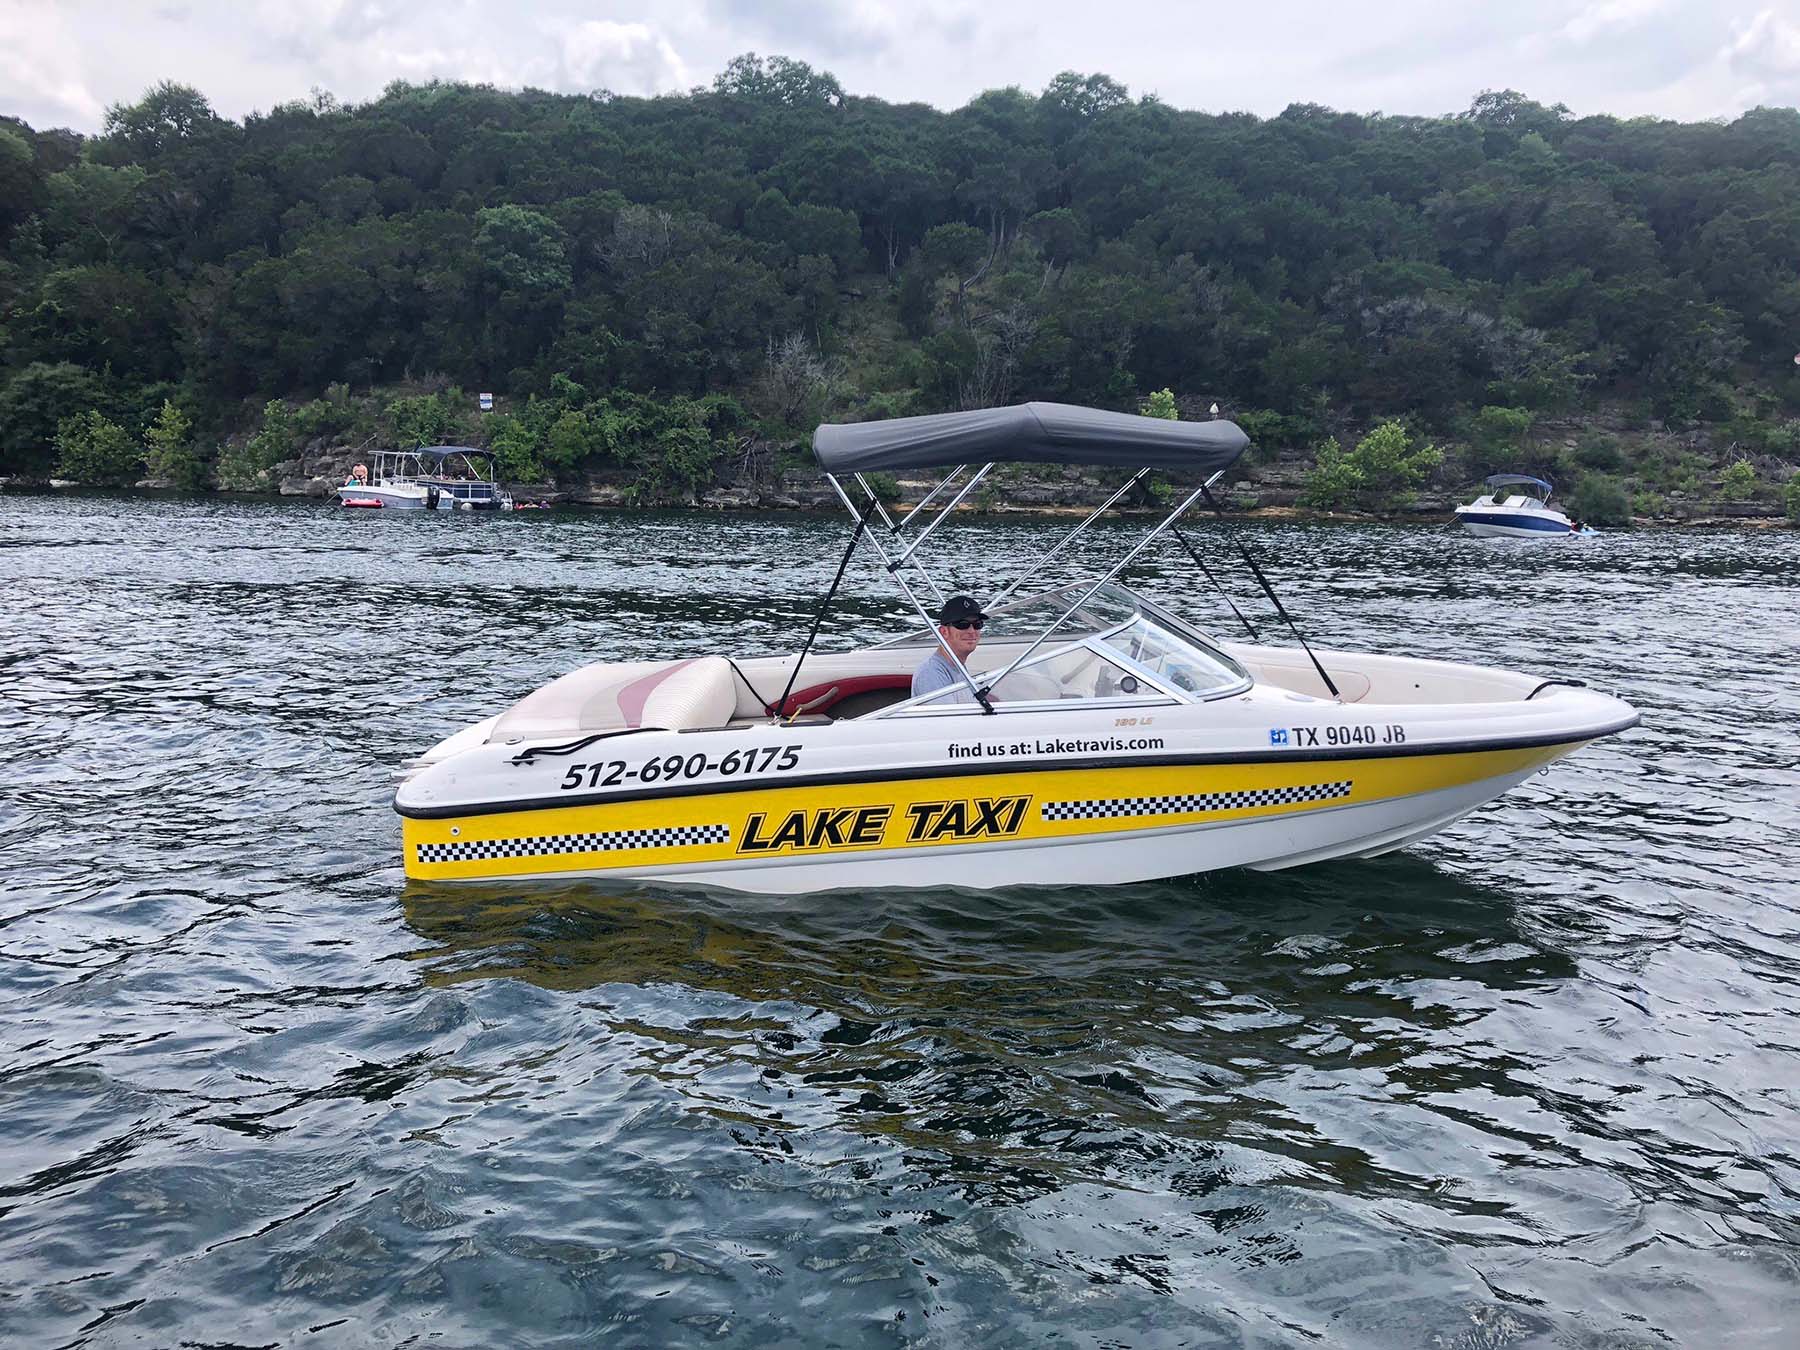 Lake Travis Lake Taxi